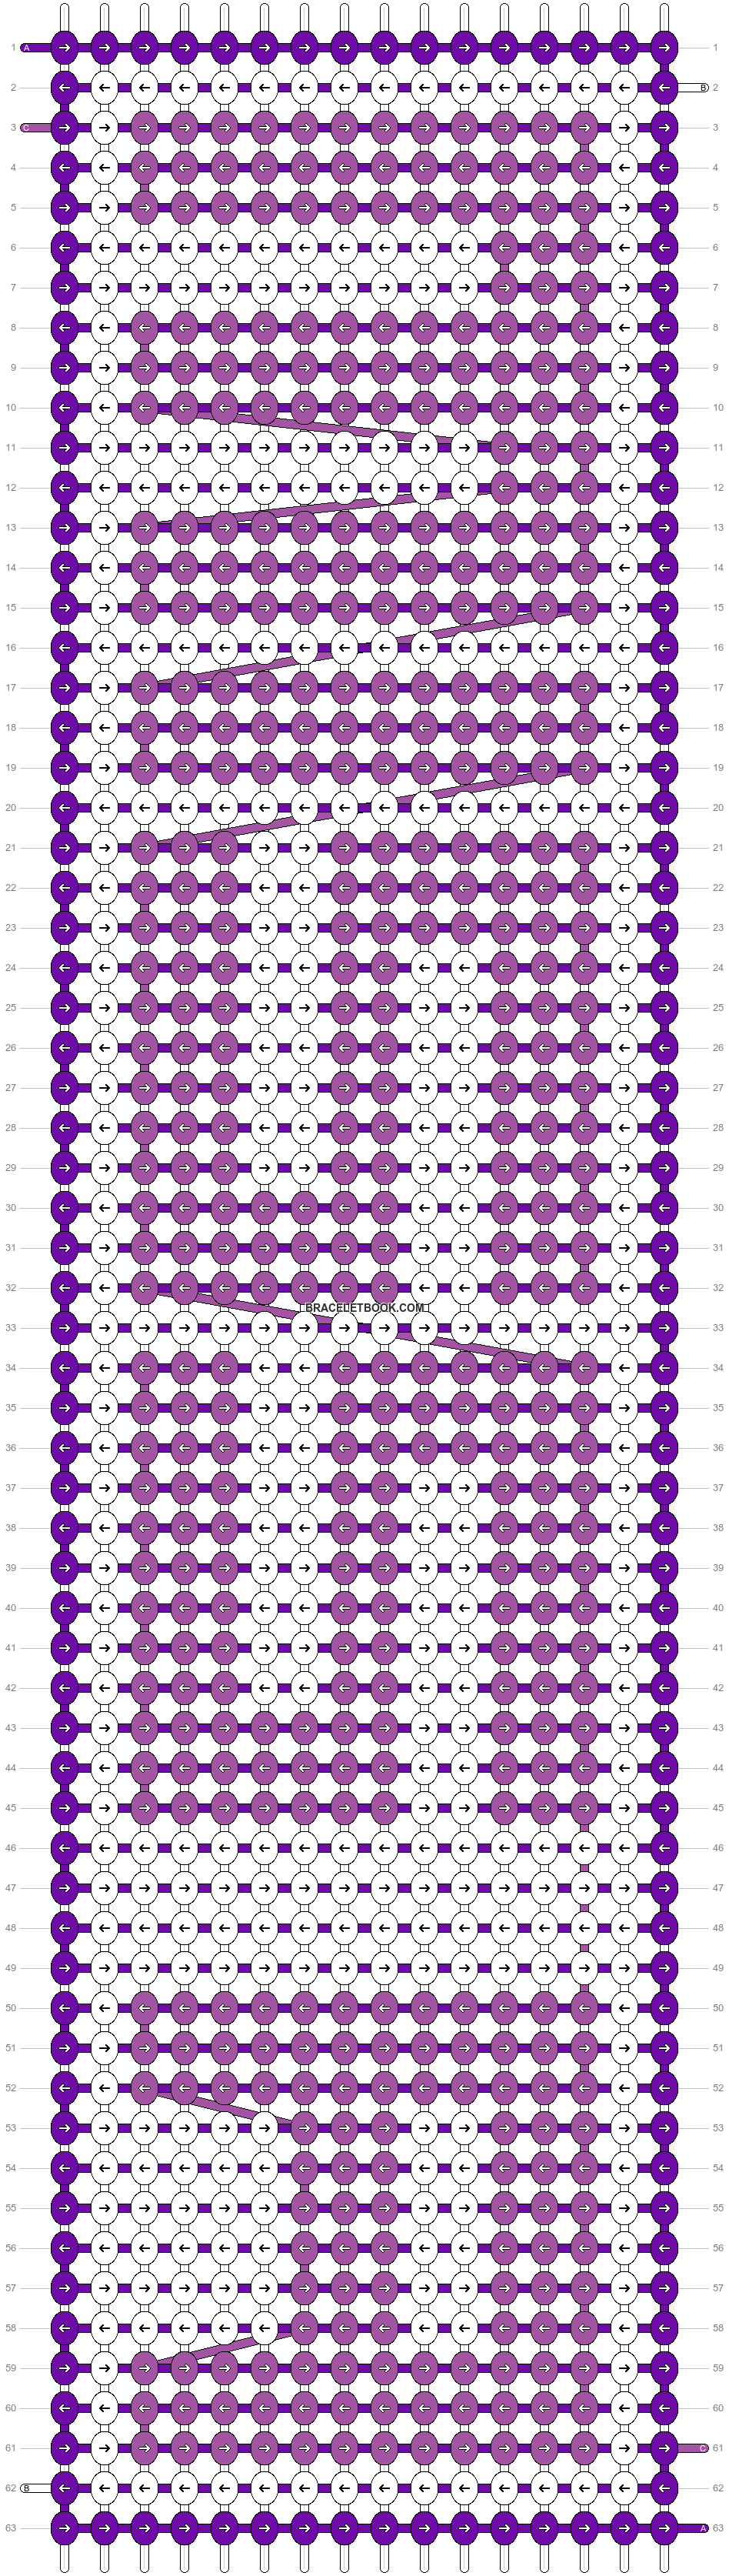 Alpha pattern #18370 pattern